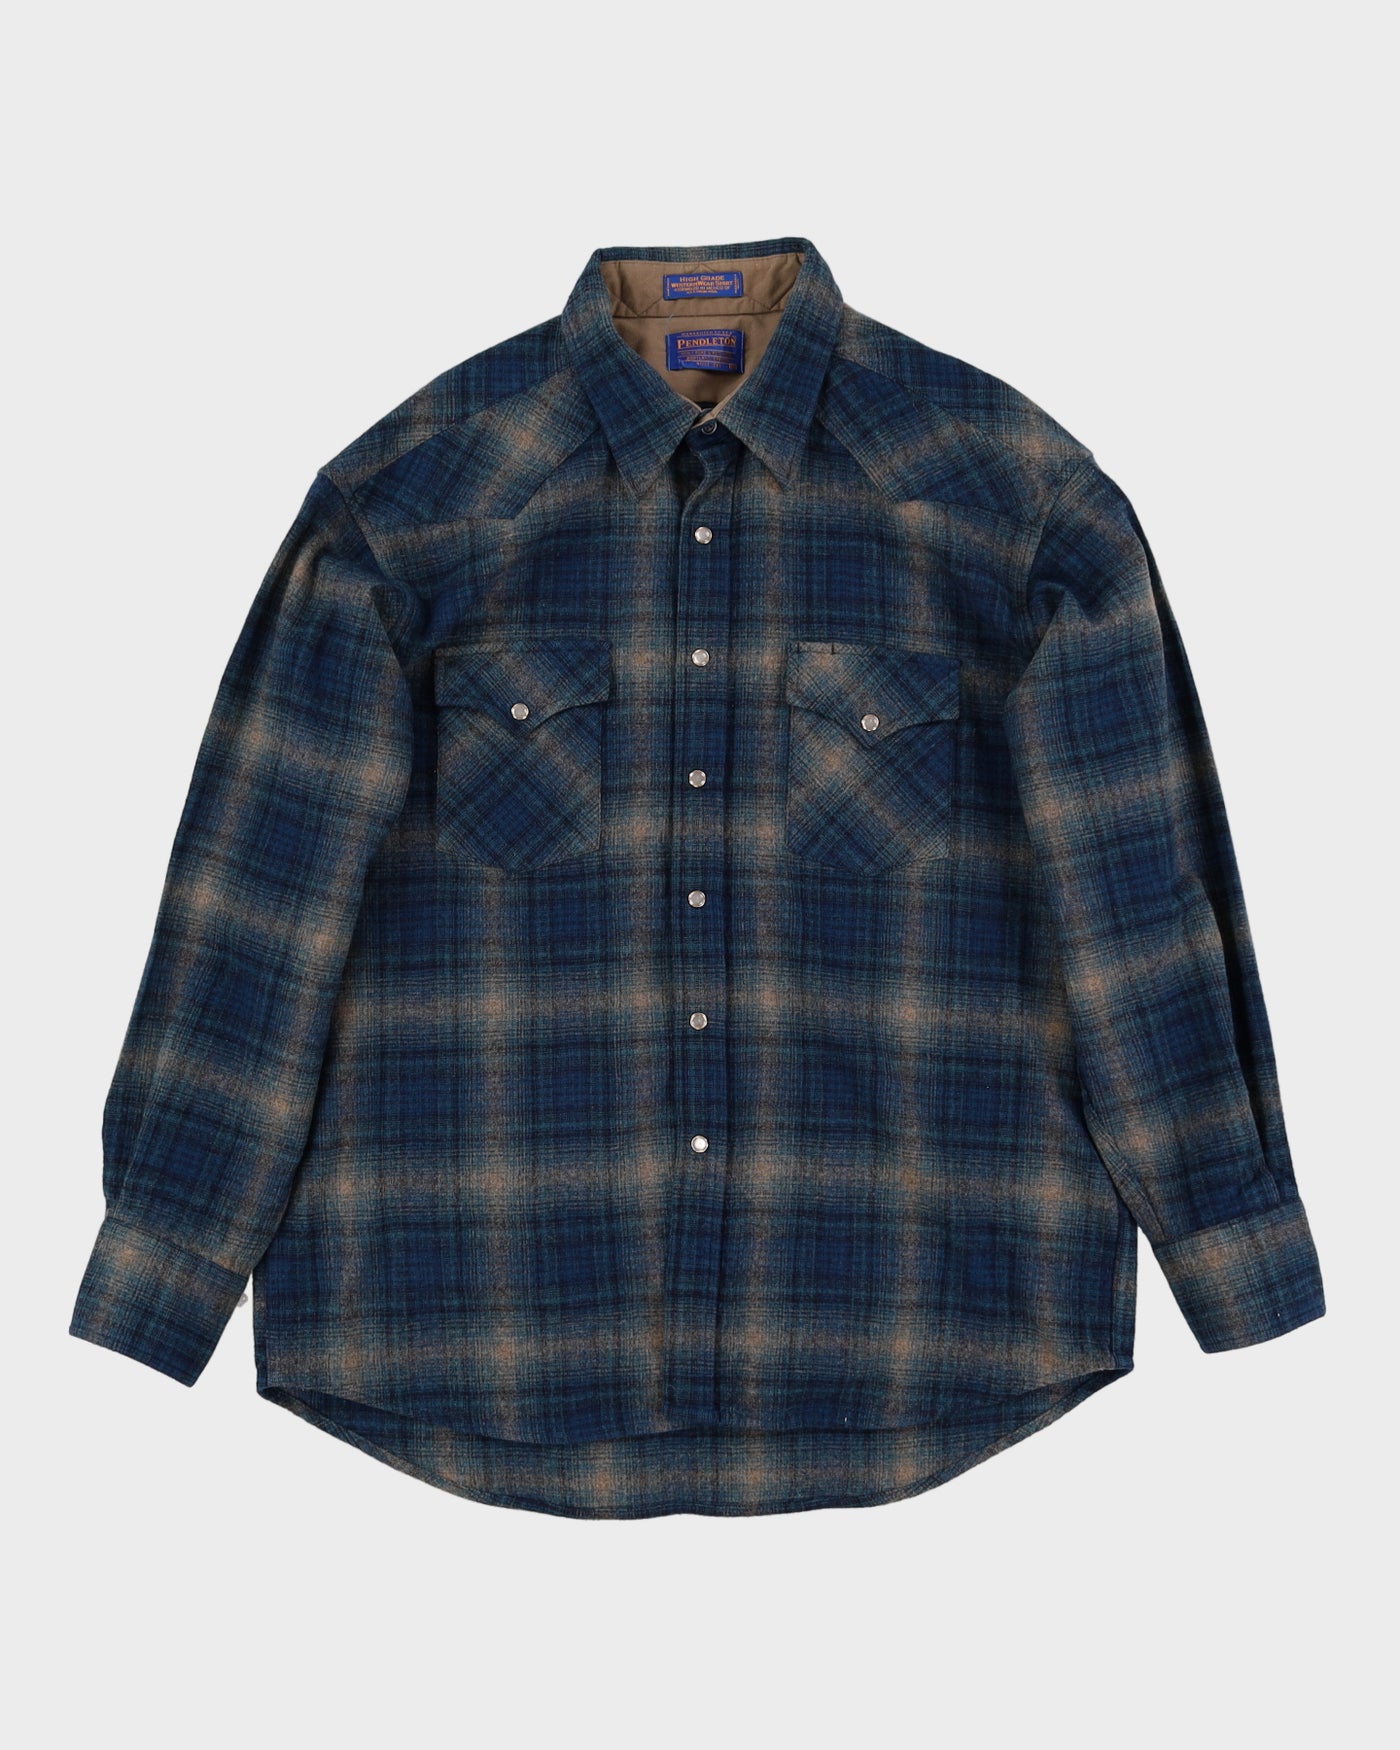 Pendleton Green Checked Wool Shirt - XL